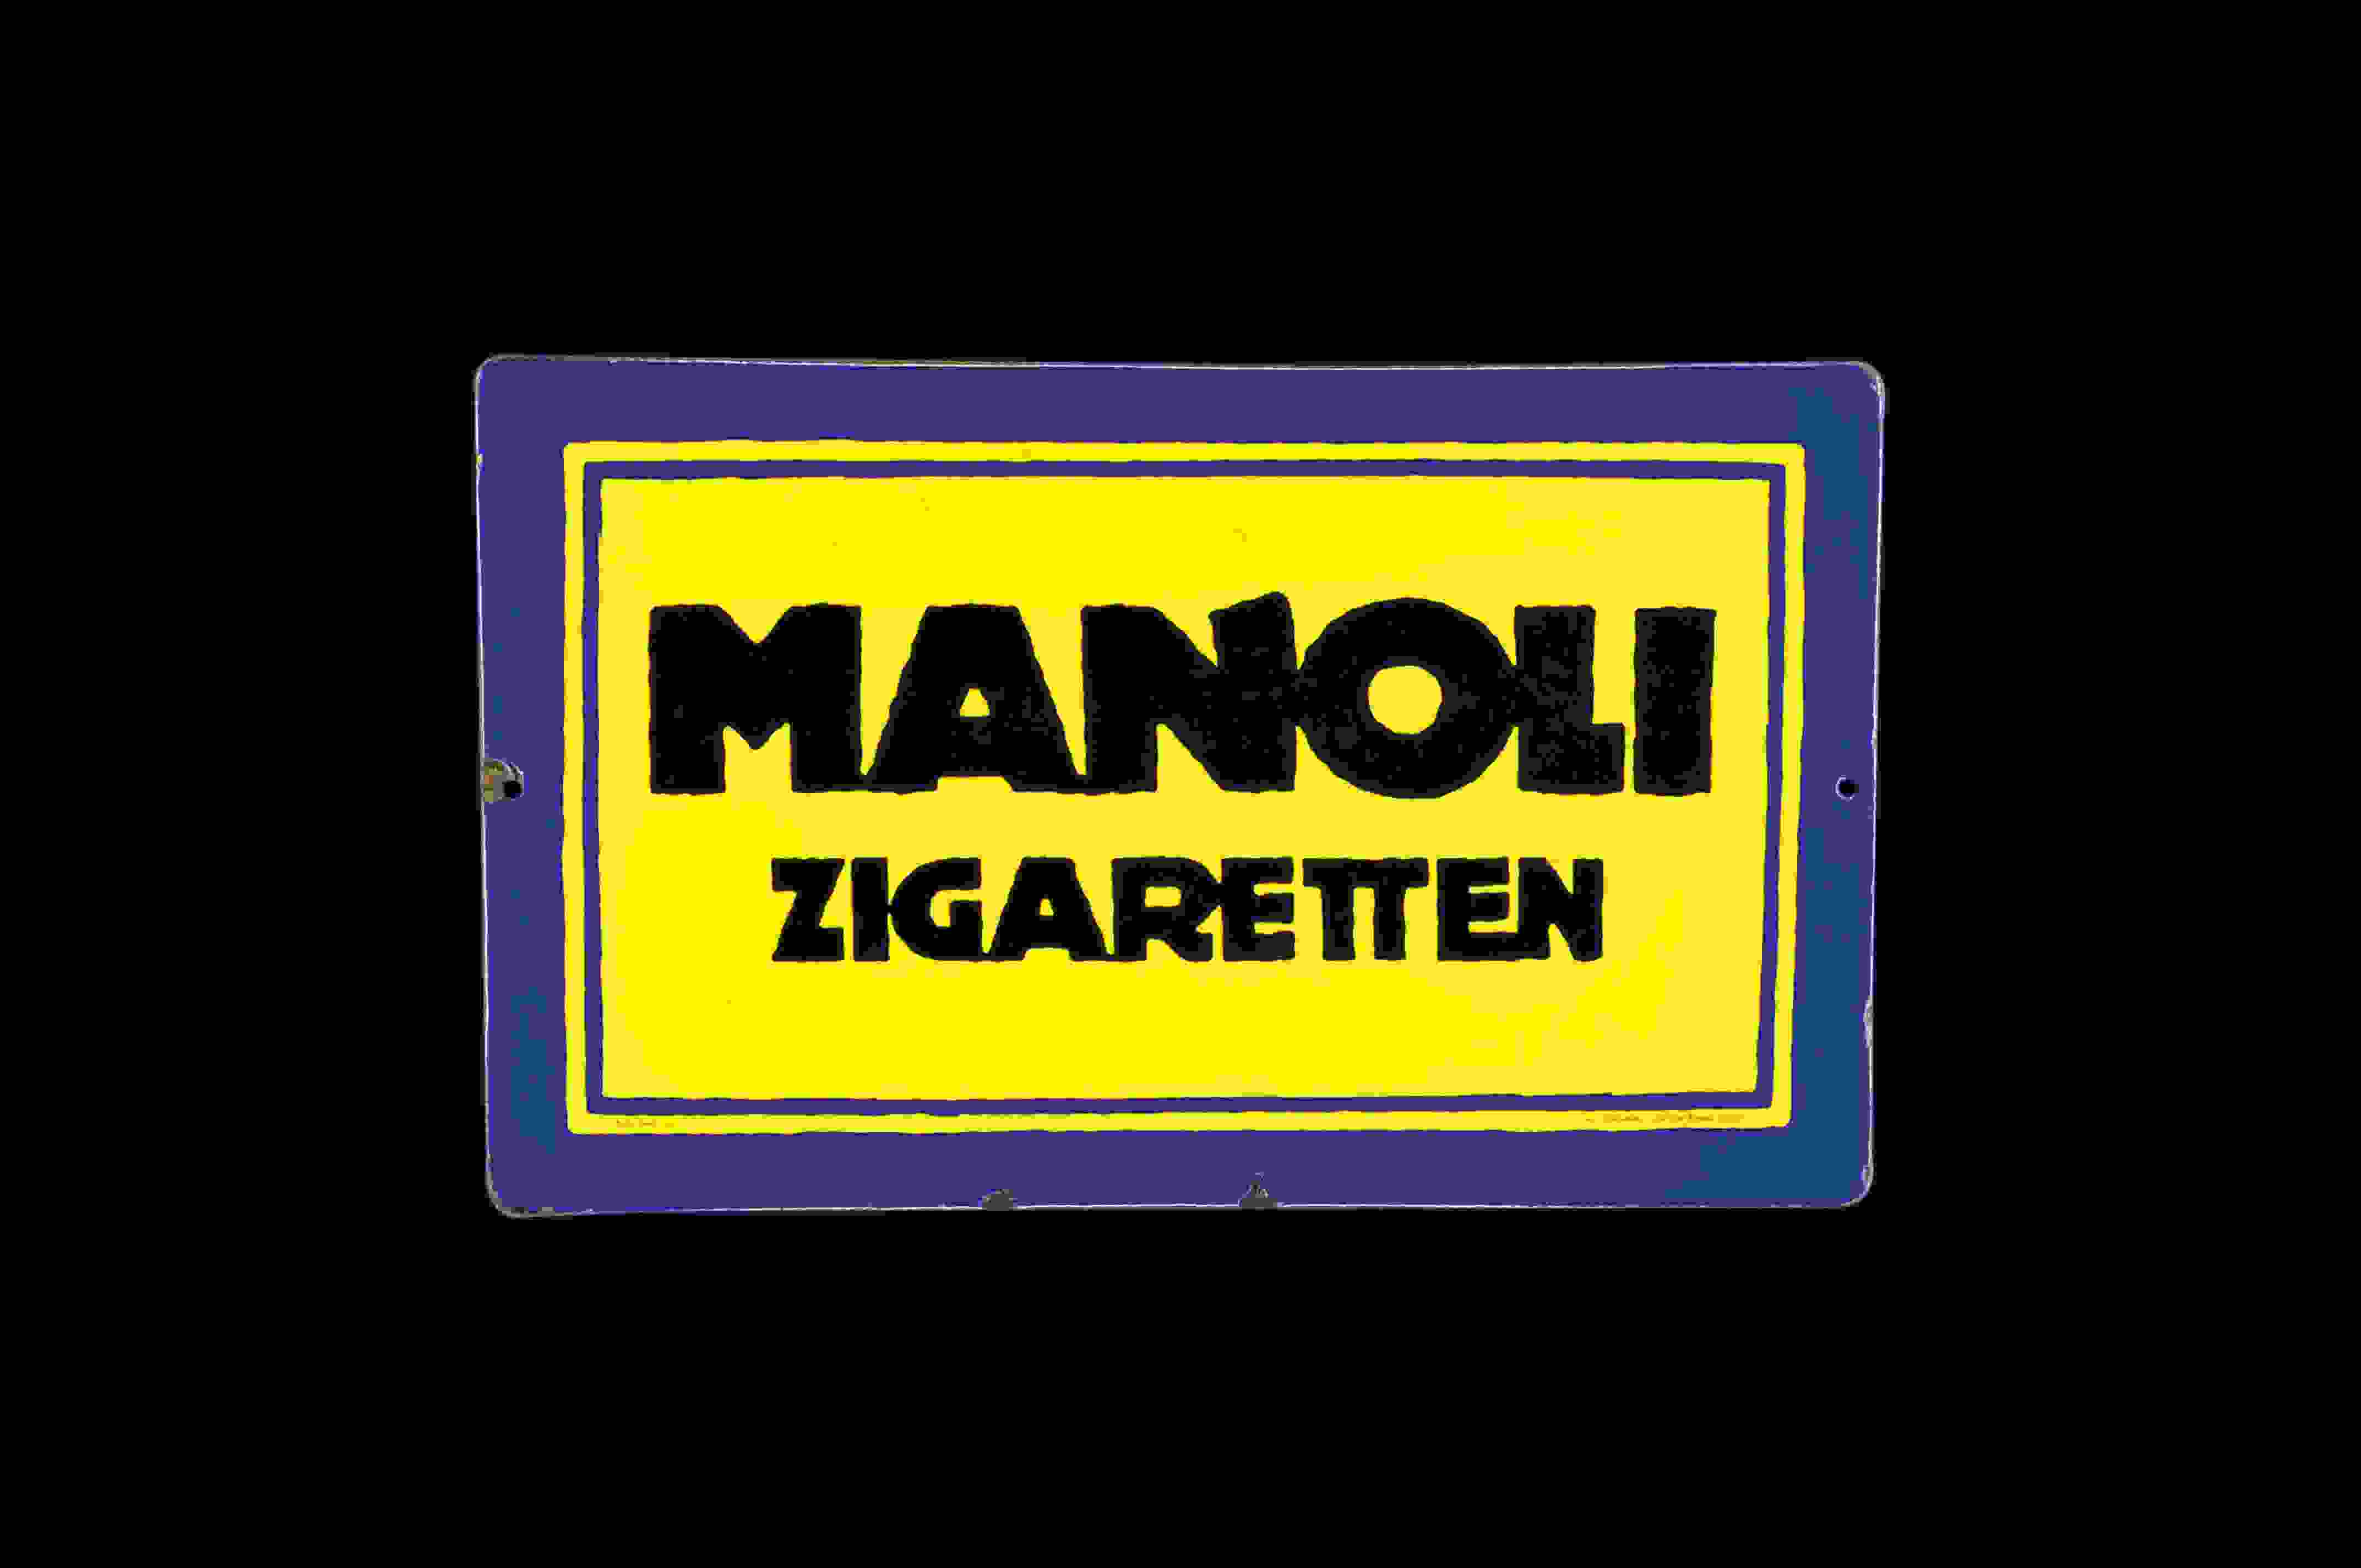 Manoli 